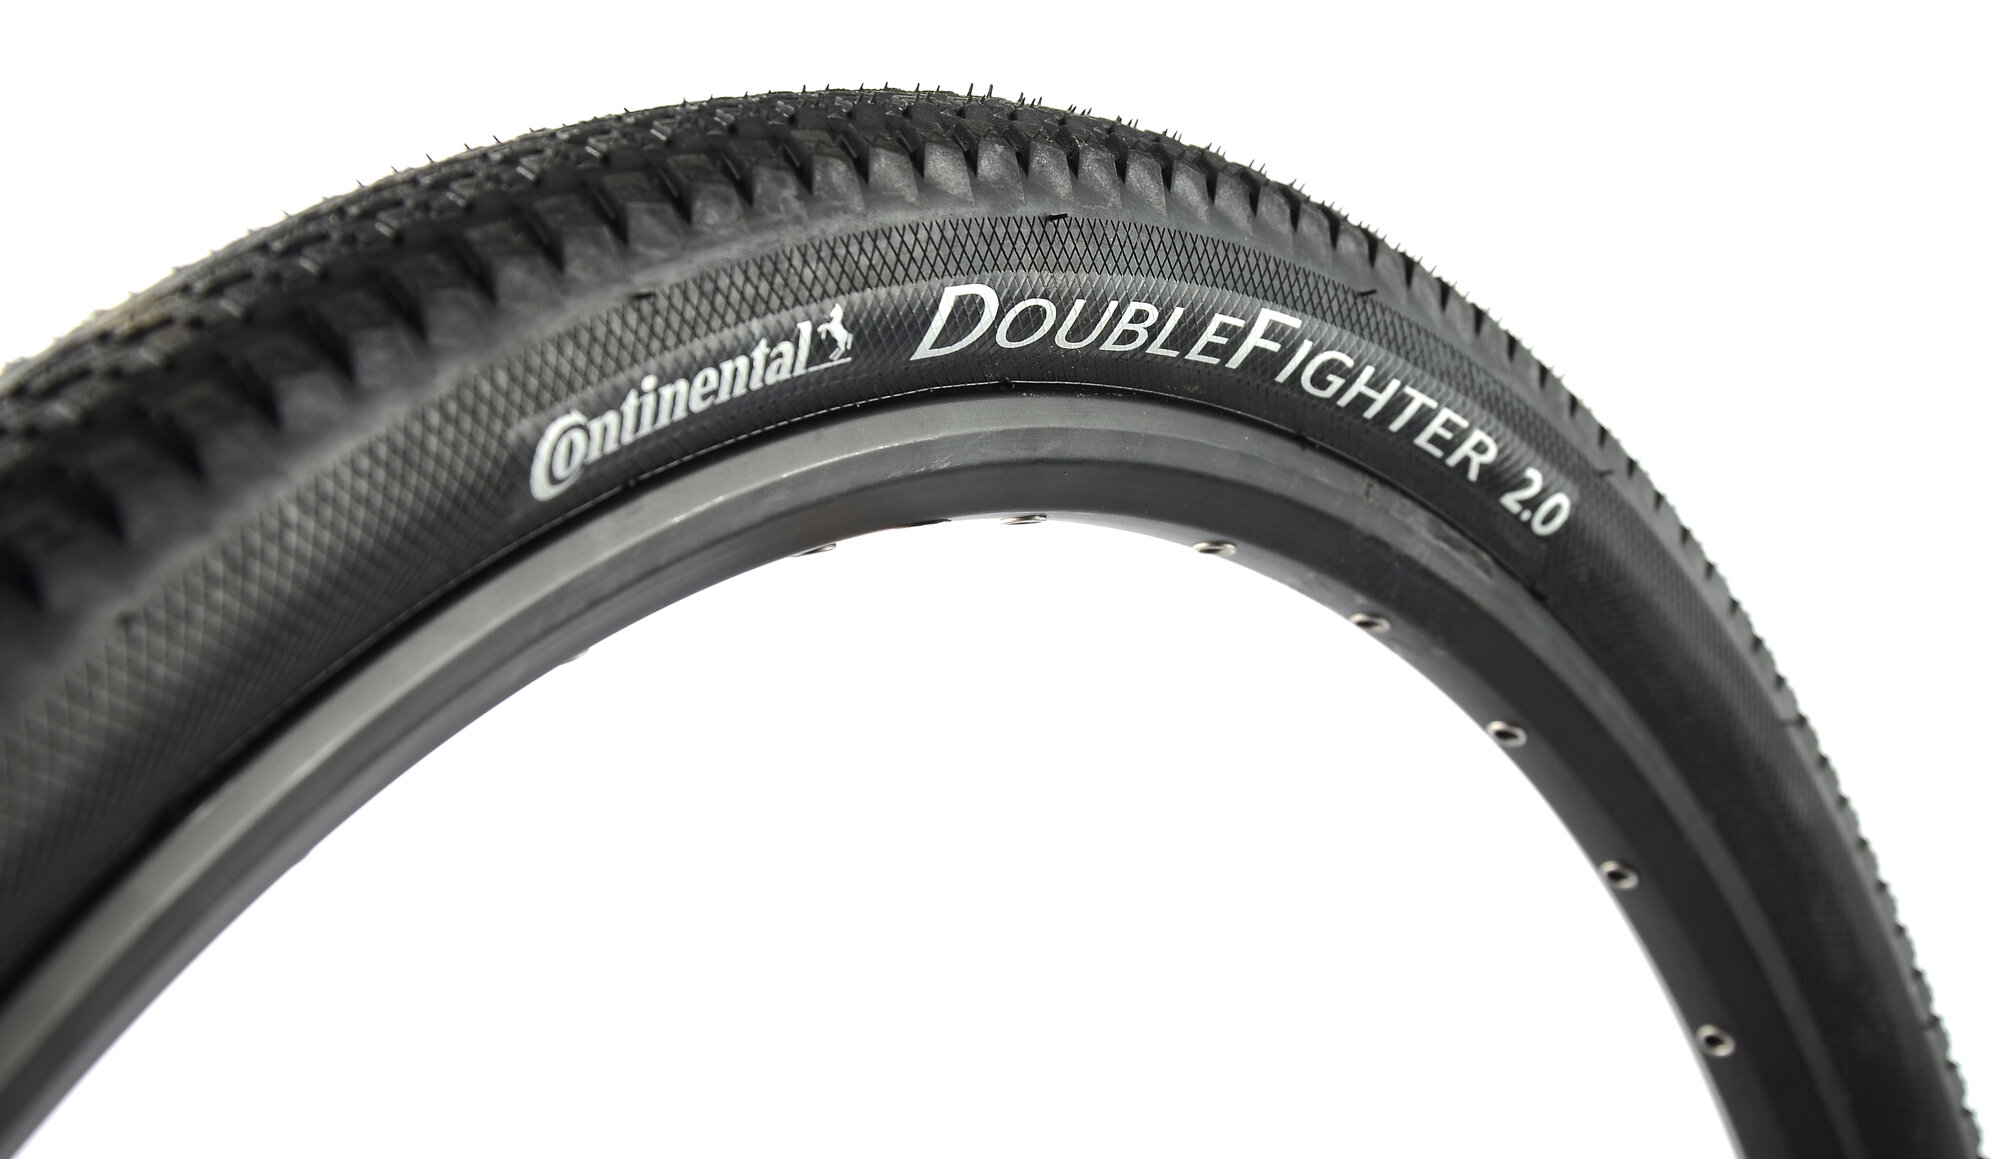 Покрышка для велосипеда Continental Double Fighter 3 29х2.00 (50-622), жесткий корд, 65PSI, чёрная